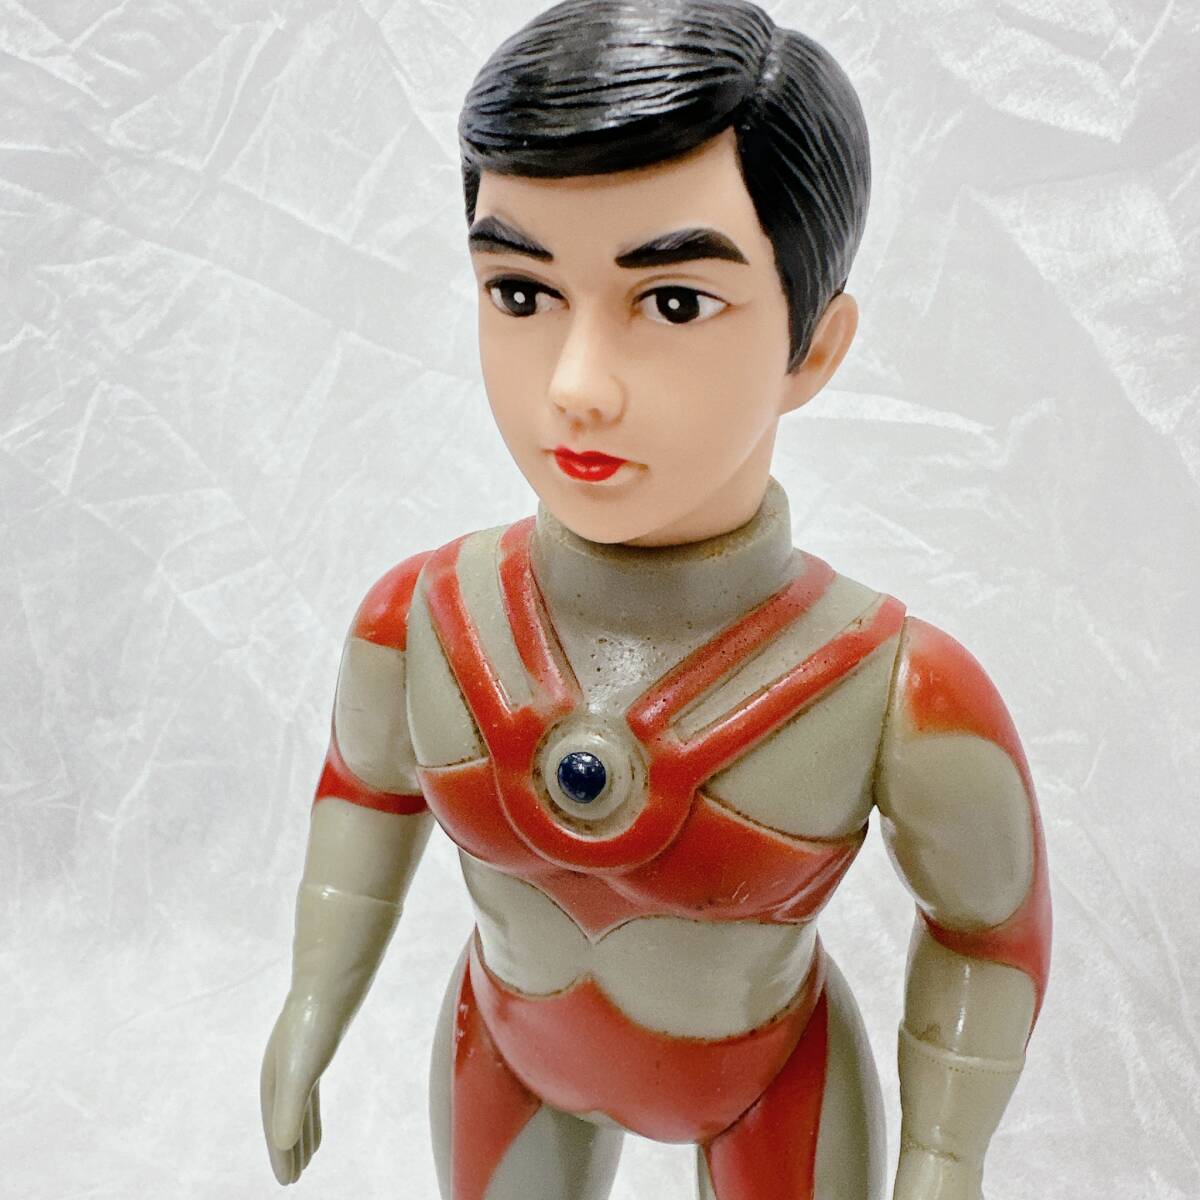  jpy .p Lobb ruma.k Ultraman A Ultraman Ace sofvi doll that time thing approximately 32cm